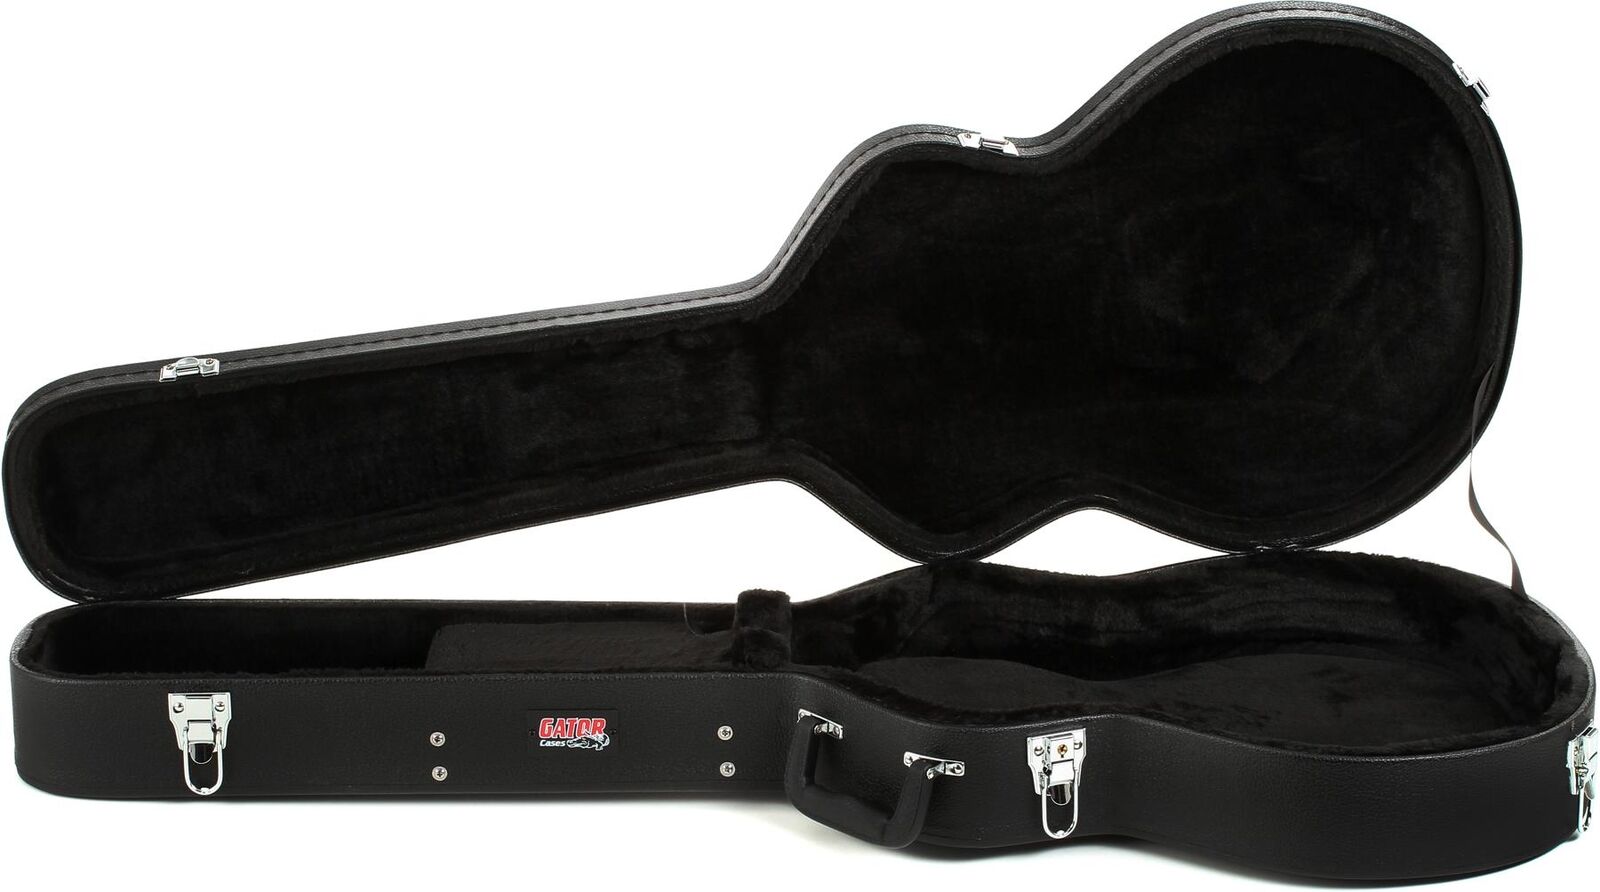 Gator Economy Wood Case - Semi-Hollowbody Guitar Case